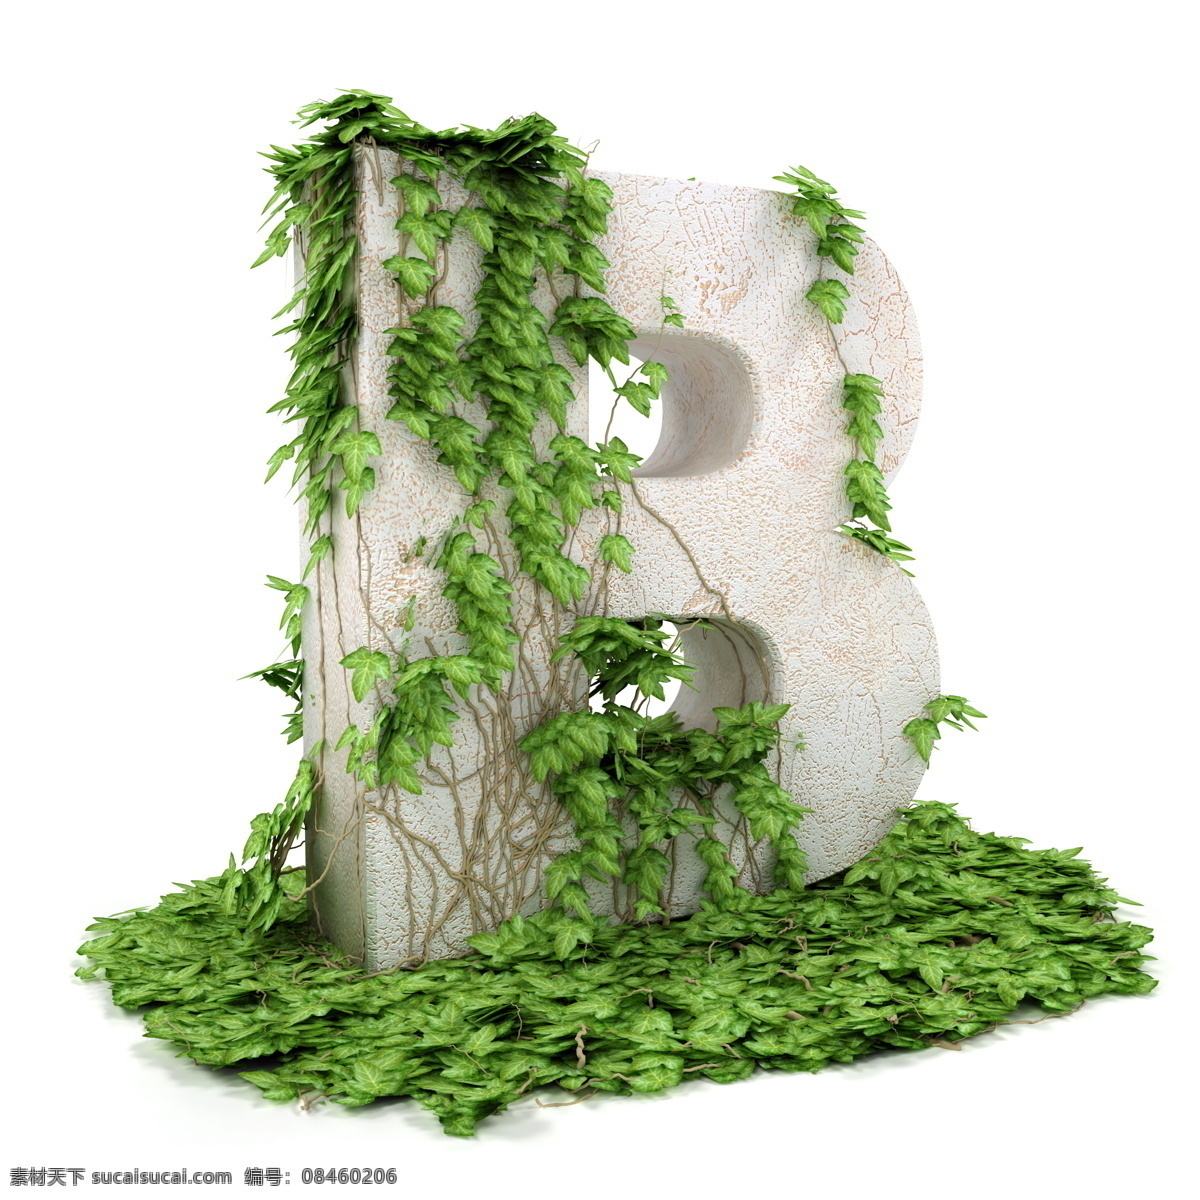 3d 立体 字 b 英文 字母 树叶 叶子 藤蔓 植物 立体字 艺术字 绿色 环保 书画文字 文化艺术 白色